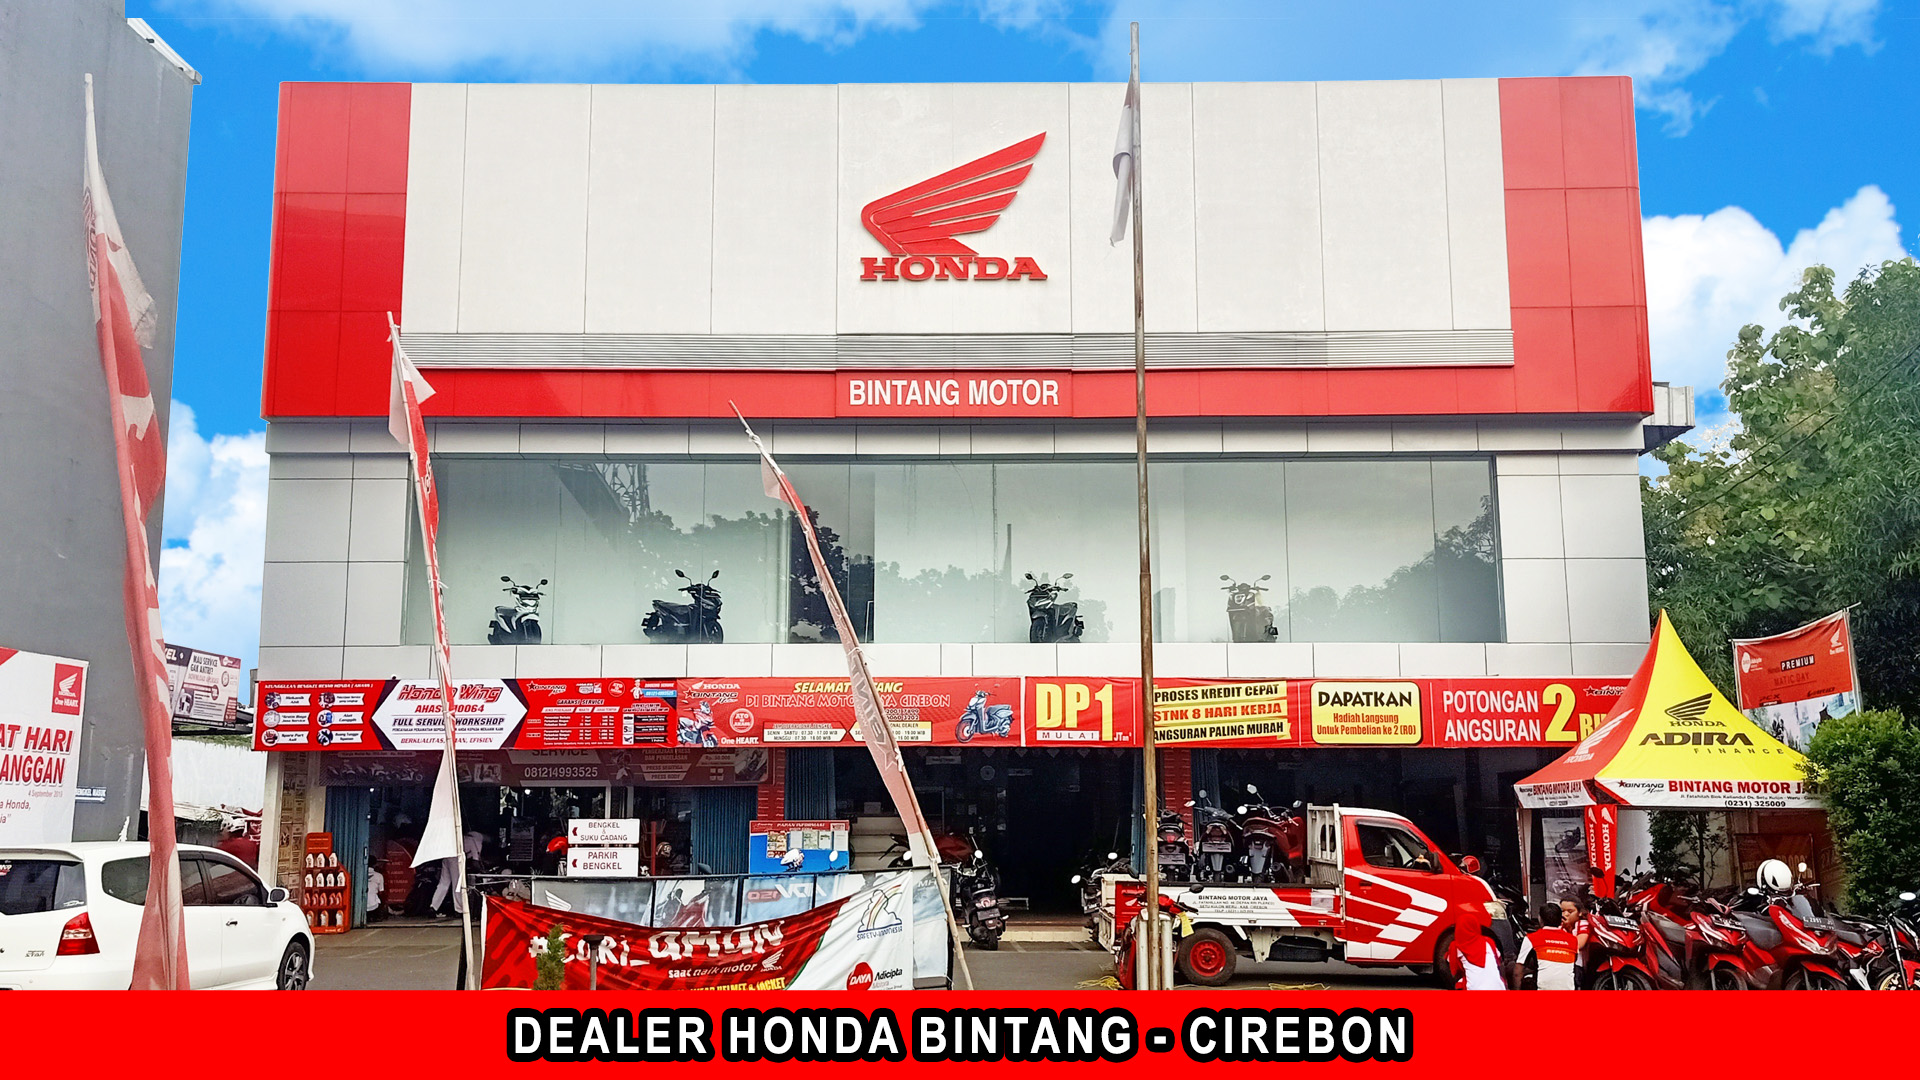 Dealer Bintang Motor Cabang Cirebon Honda Bintang Motor